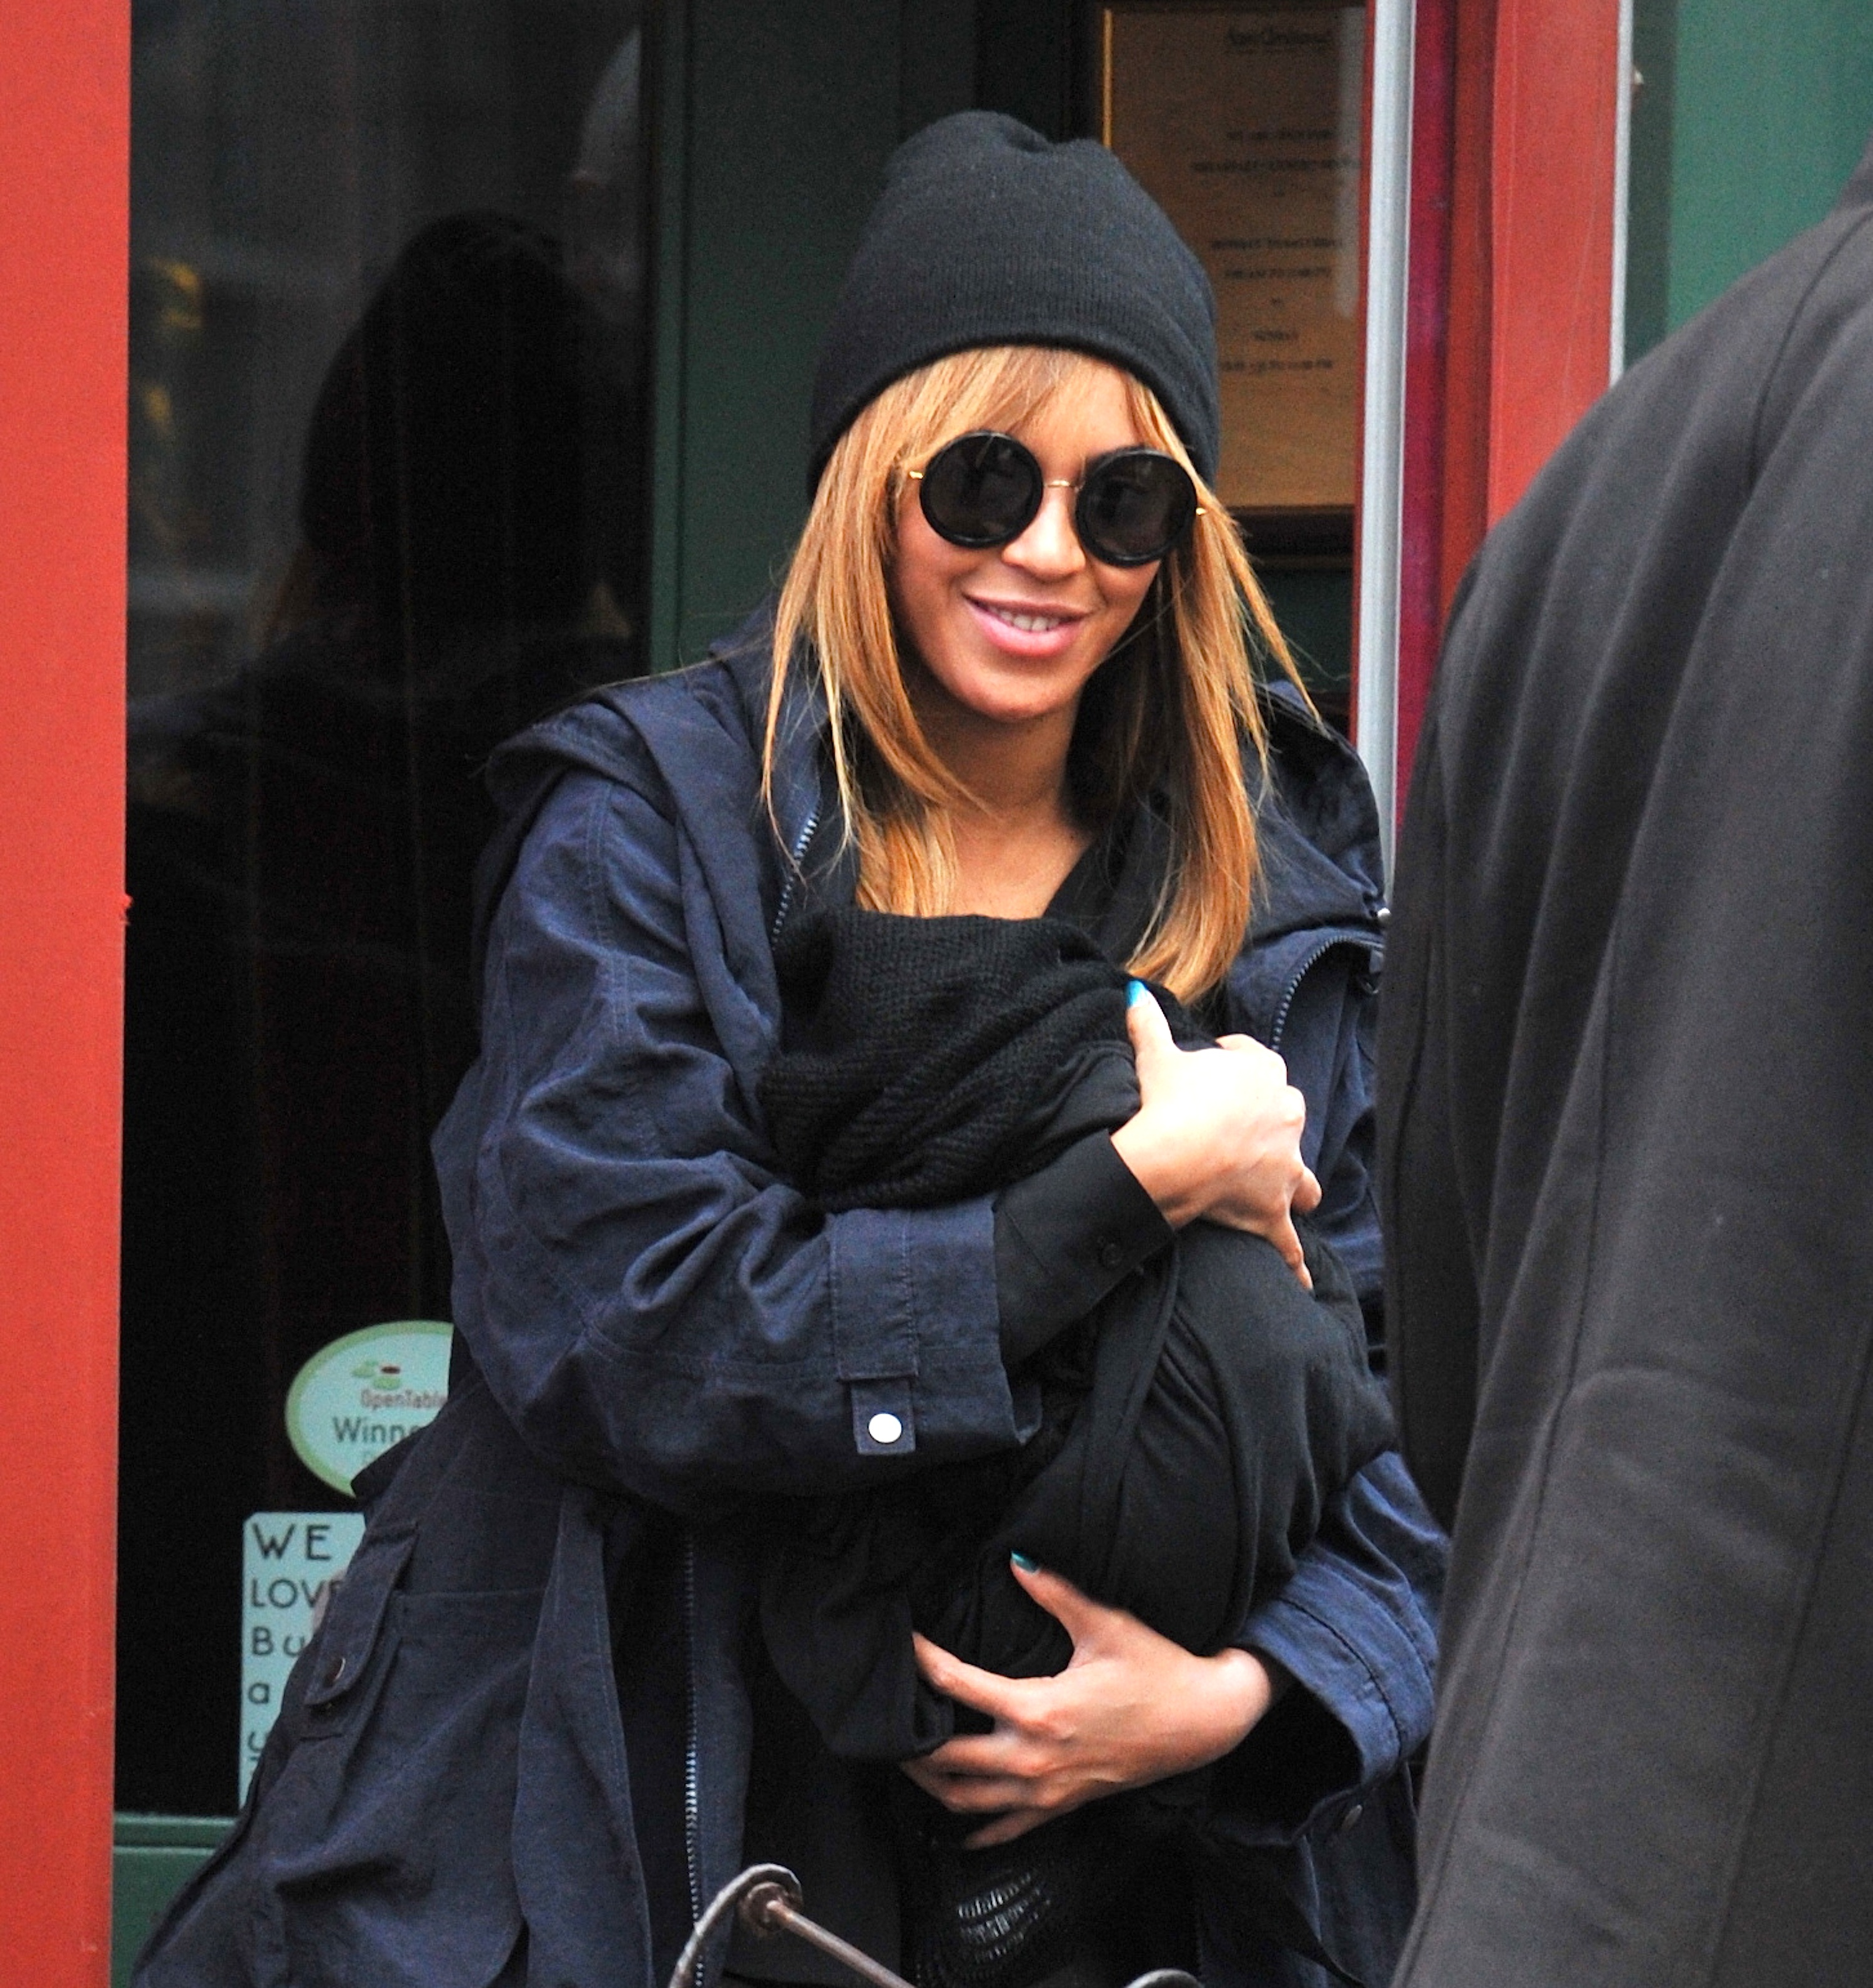 Beyonce Knowles mit ihrer Tochter Blue Ivy Carter im Arm am 25. Februar 2012 in New York City | Quelle: Getty Images